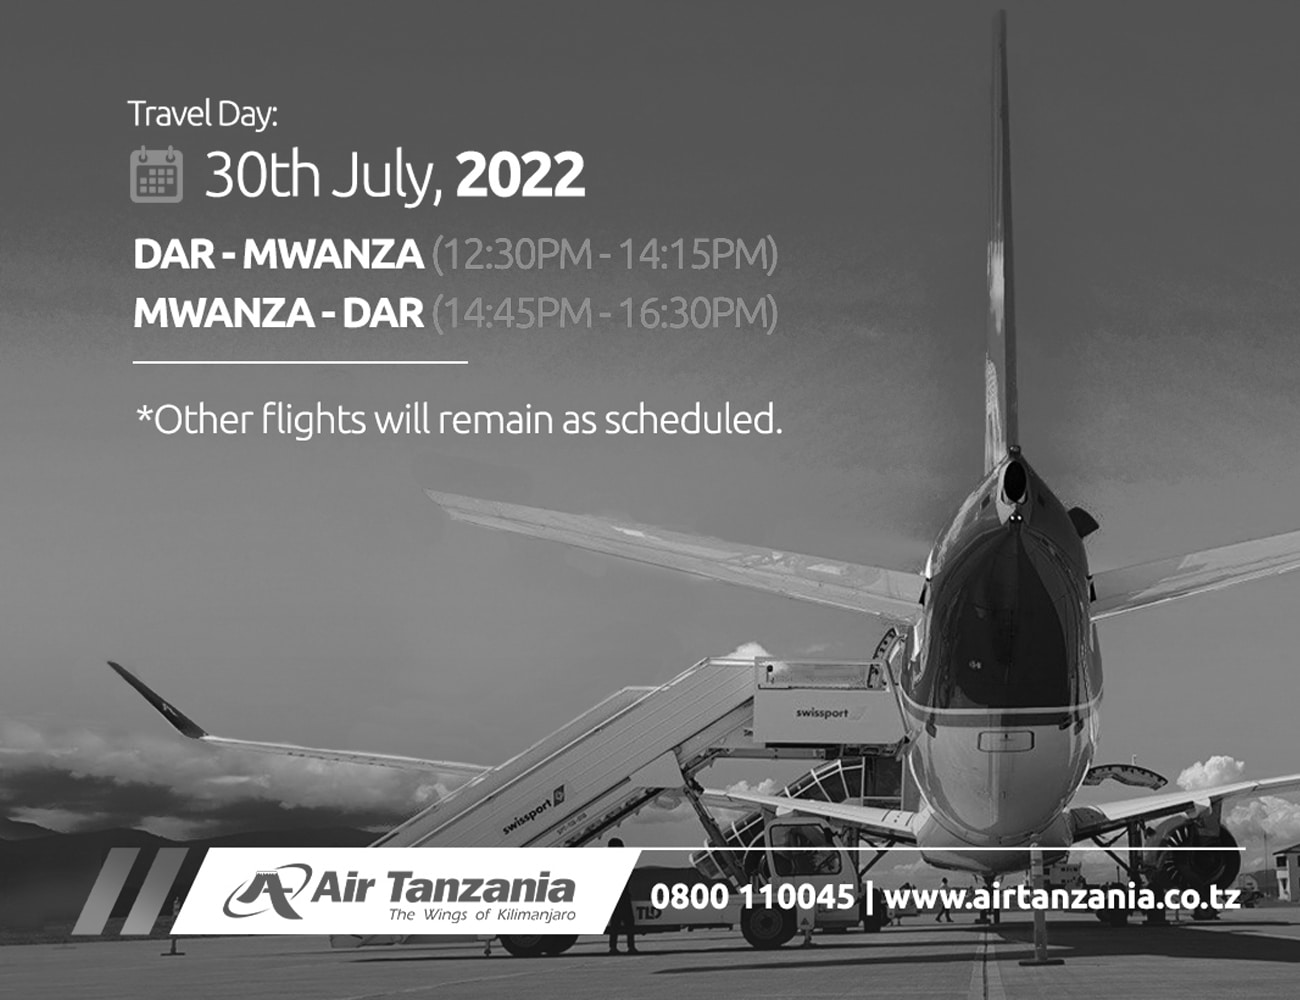 Air Tanzania Flight Deals on their Social Media Pages